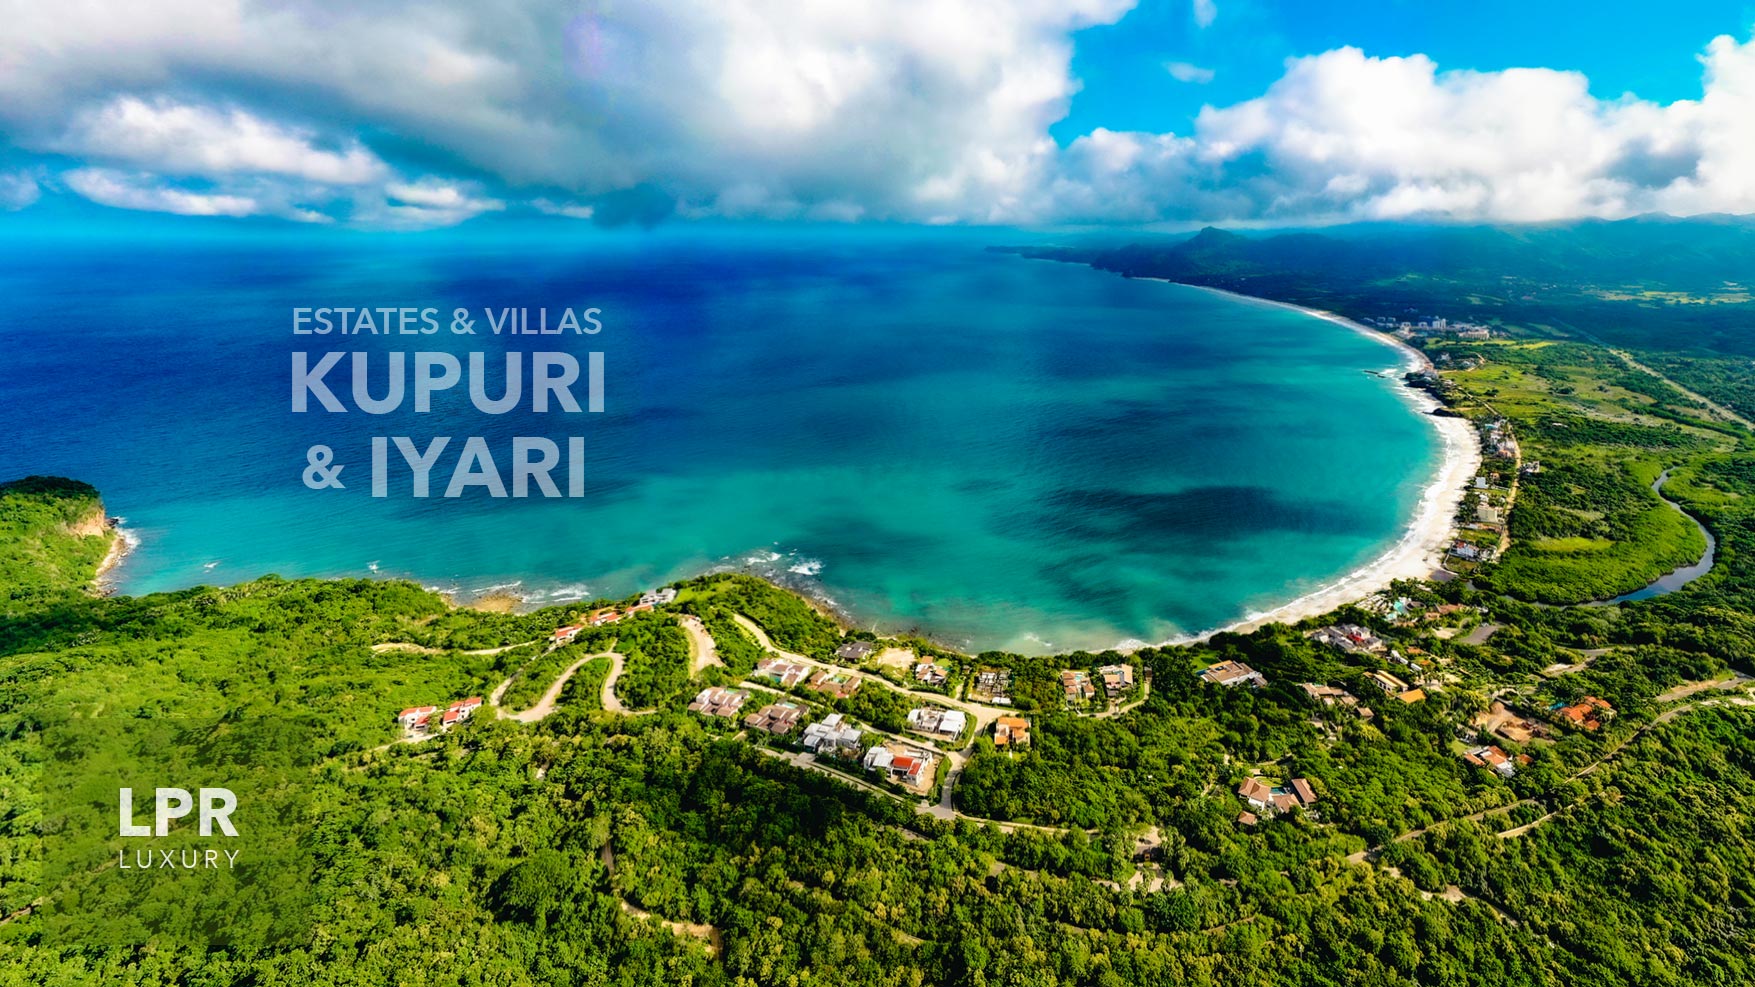 Kupuri & Iyari Estates & Villas at the Punta Mita Resort, Riviera Nayarit, Mexico